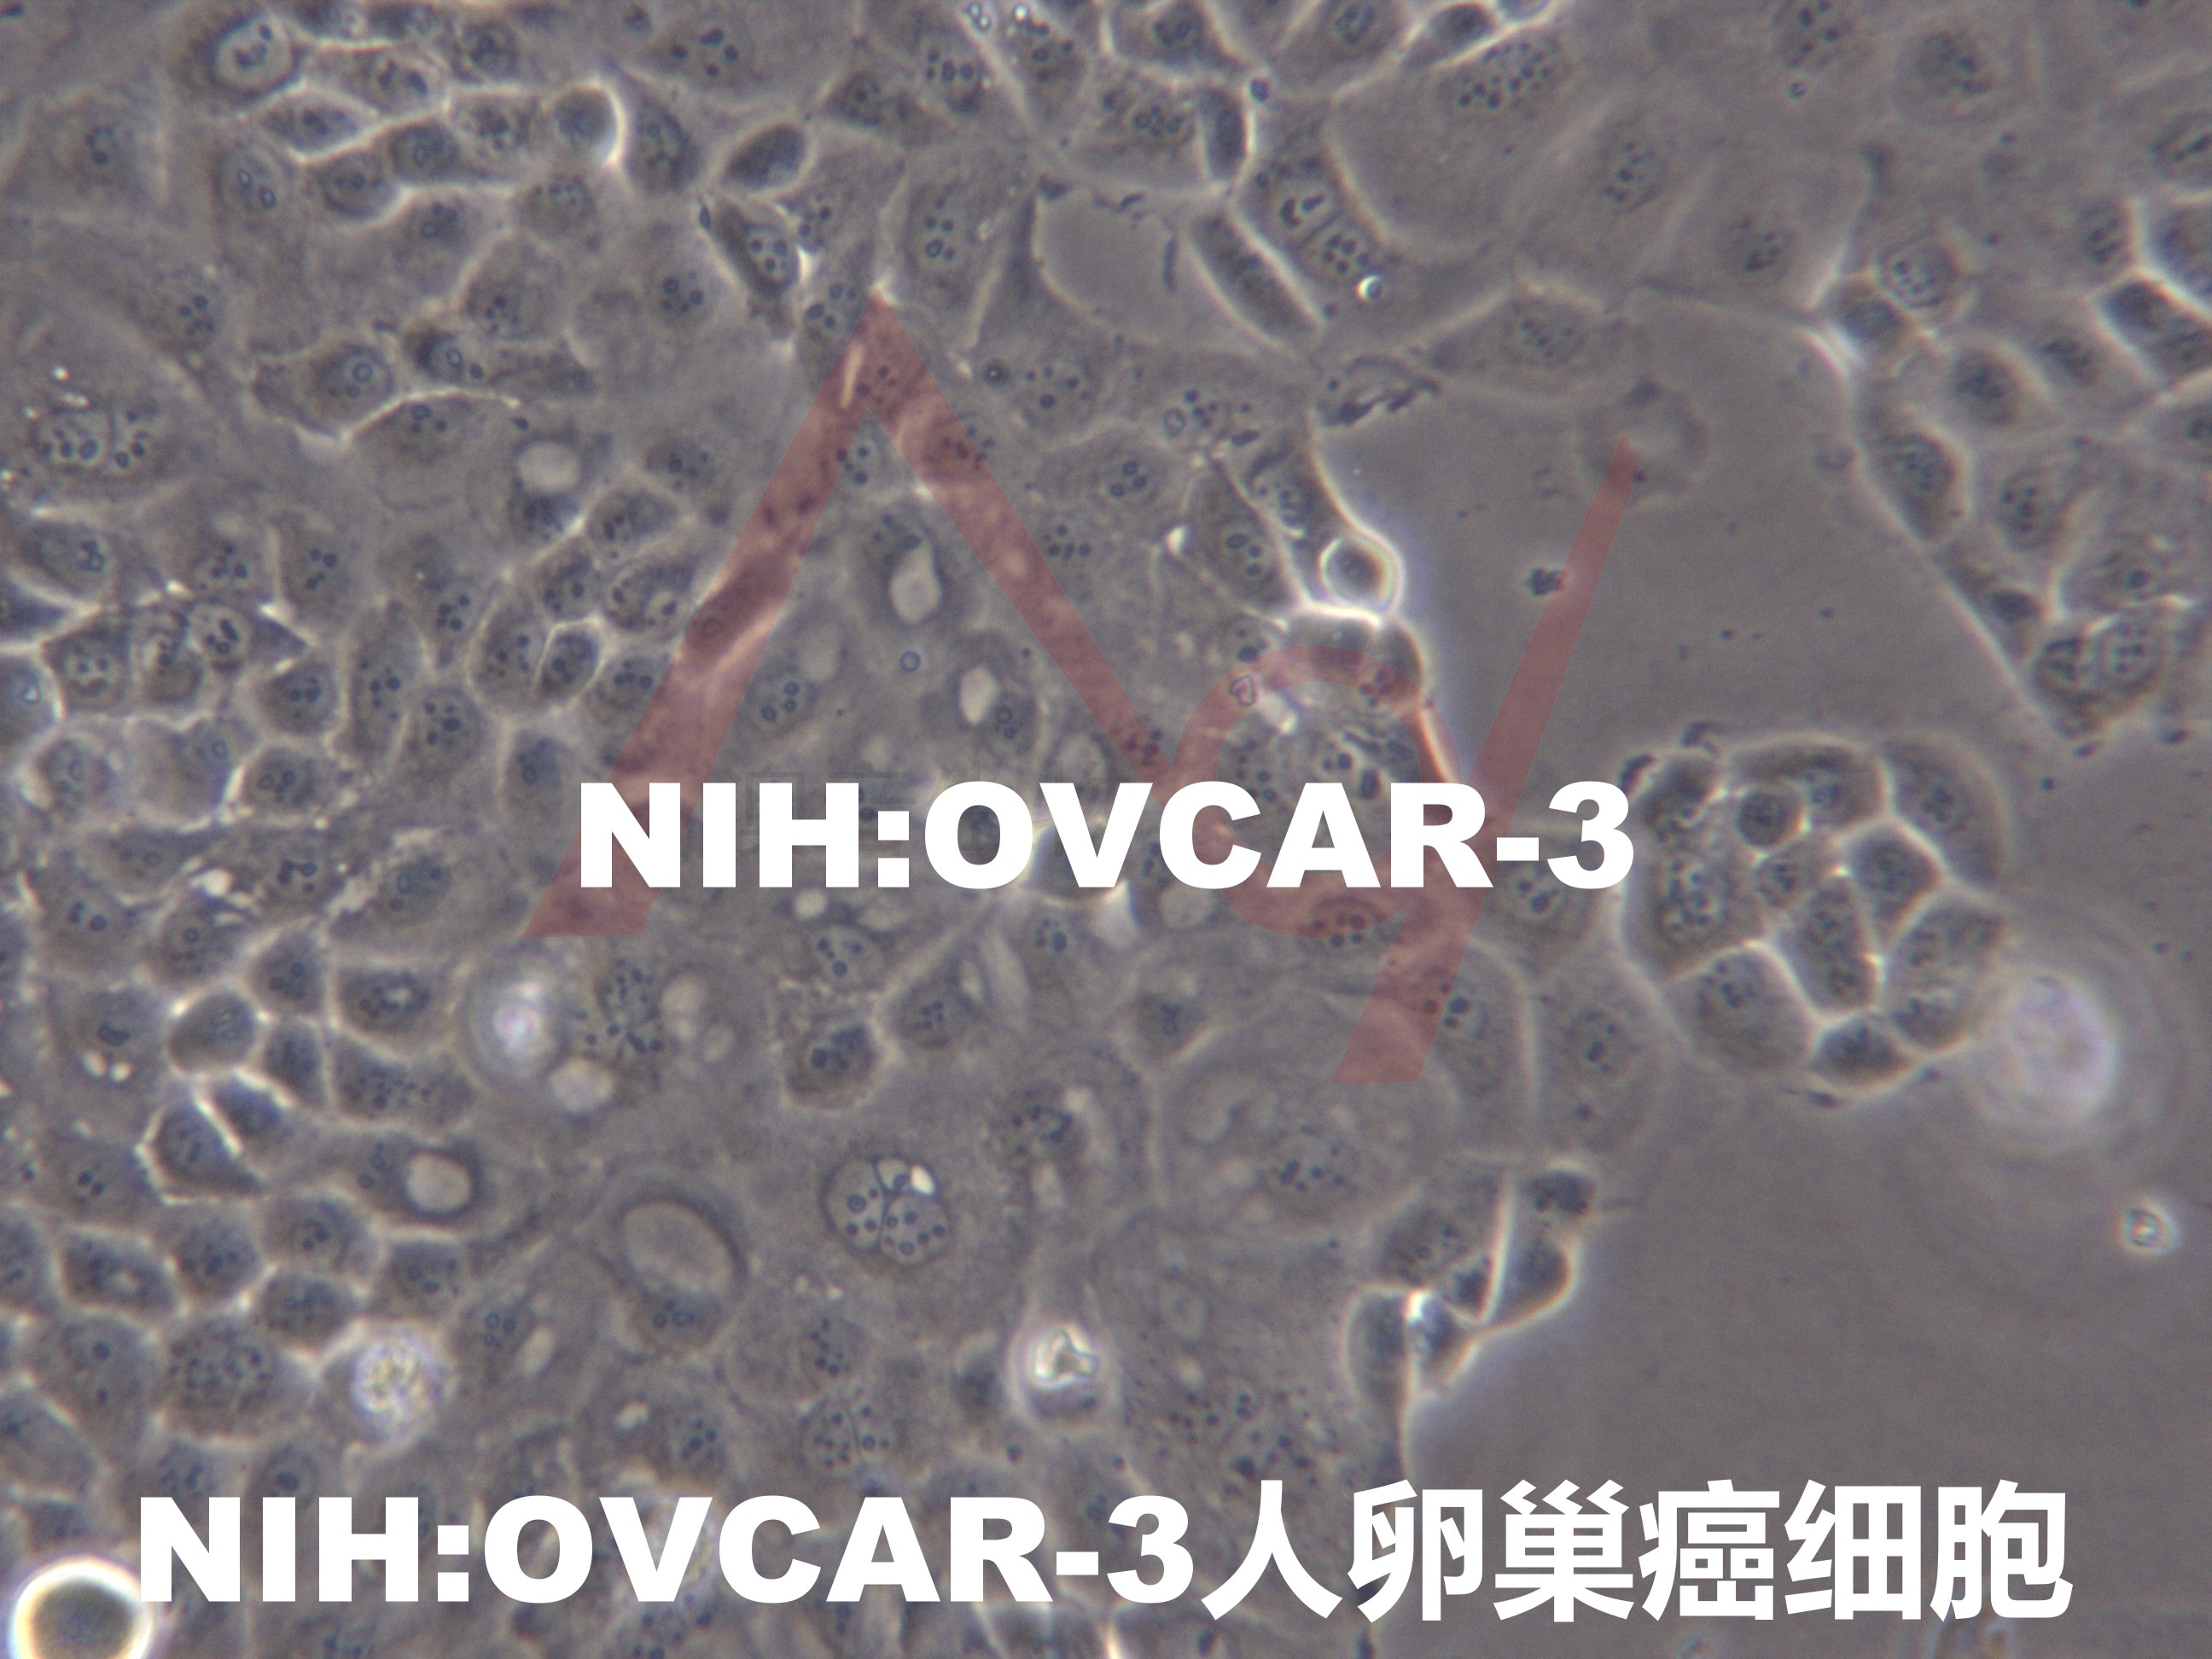 OVCAR-3[Ovcar-3; OVCAR 3; NIH:OVCAR-3; NIH:Ovcar-3; NIH:OVCAR3; NIH-OVCAR-3]卵巢癌细胞